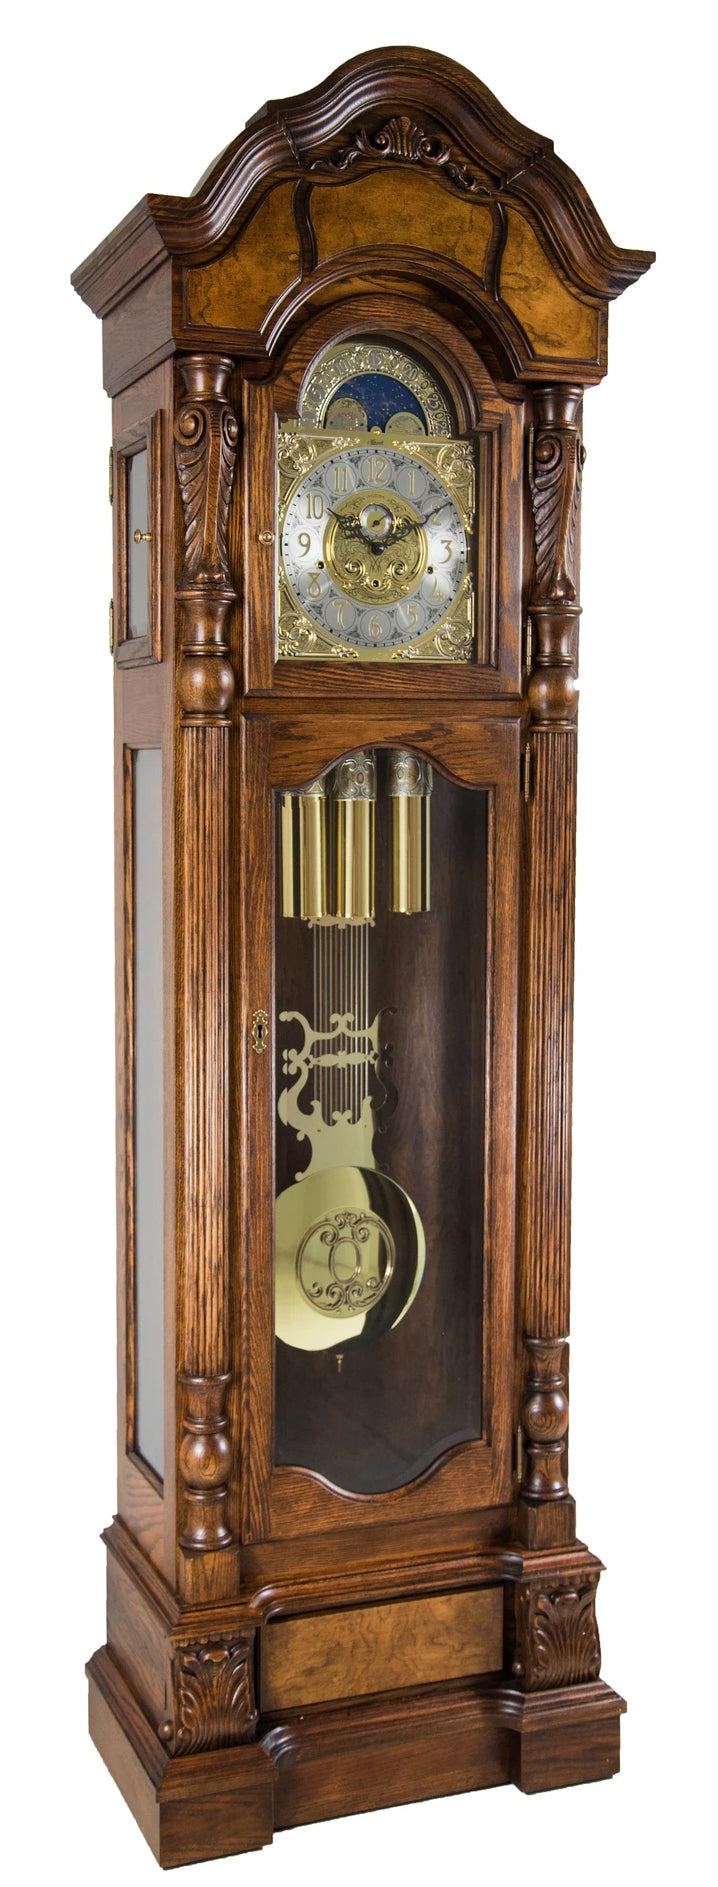 Anstead Grandfather Clock by Hermle Clocks - Dark Oak